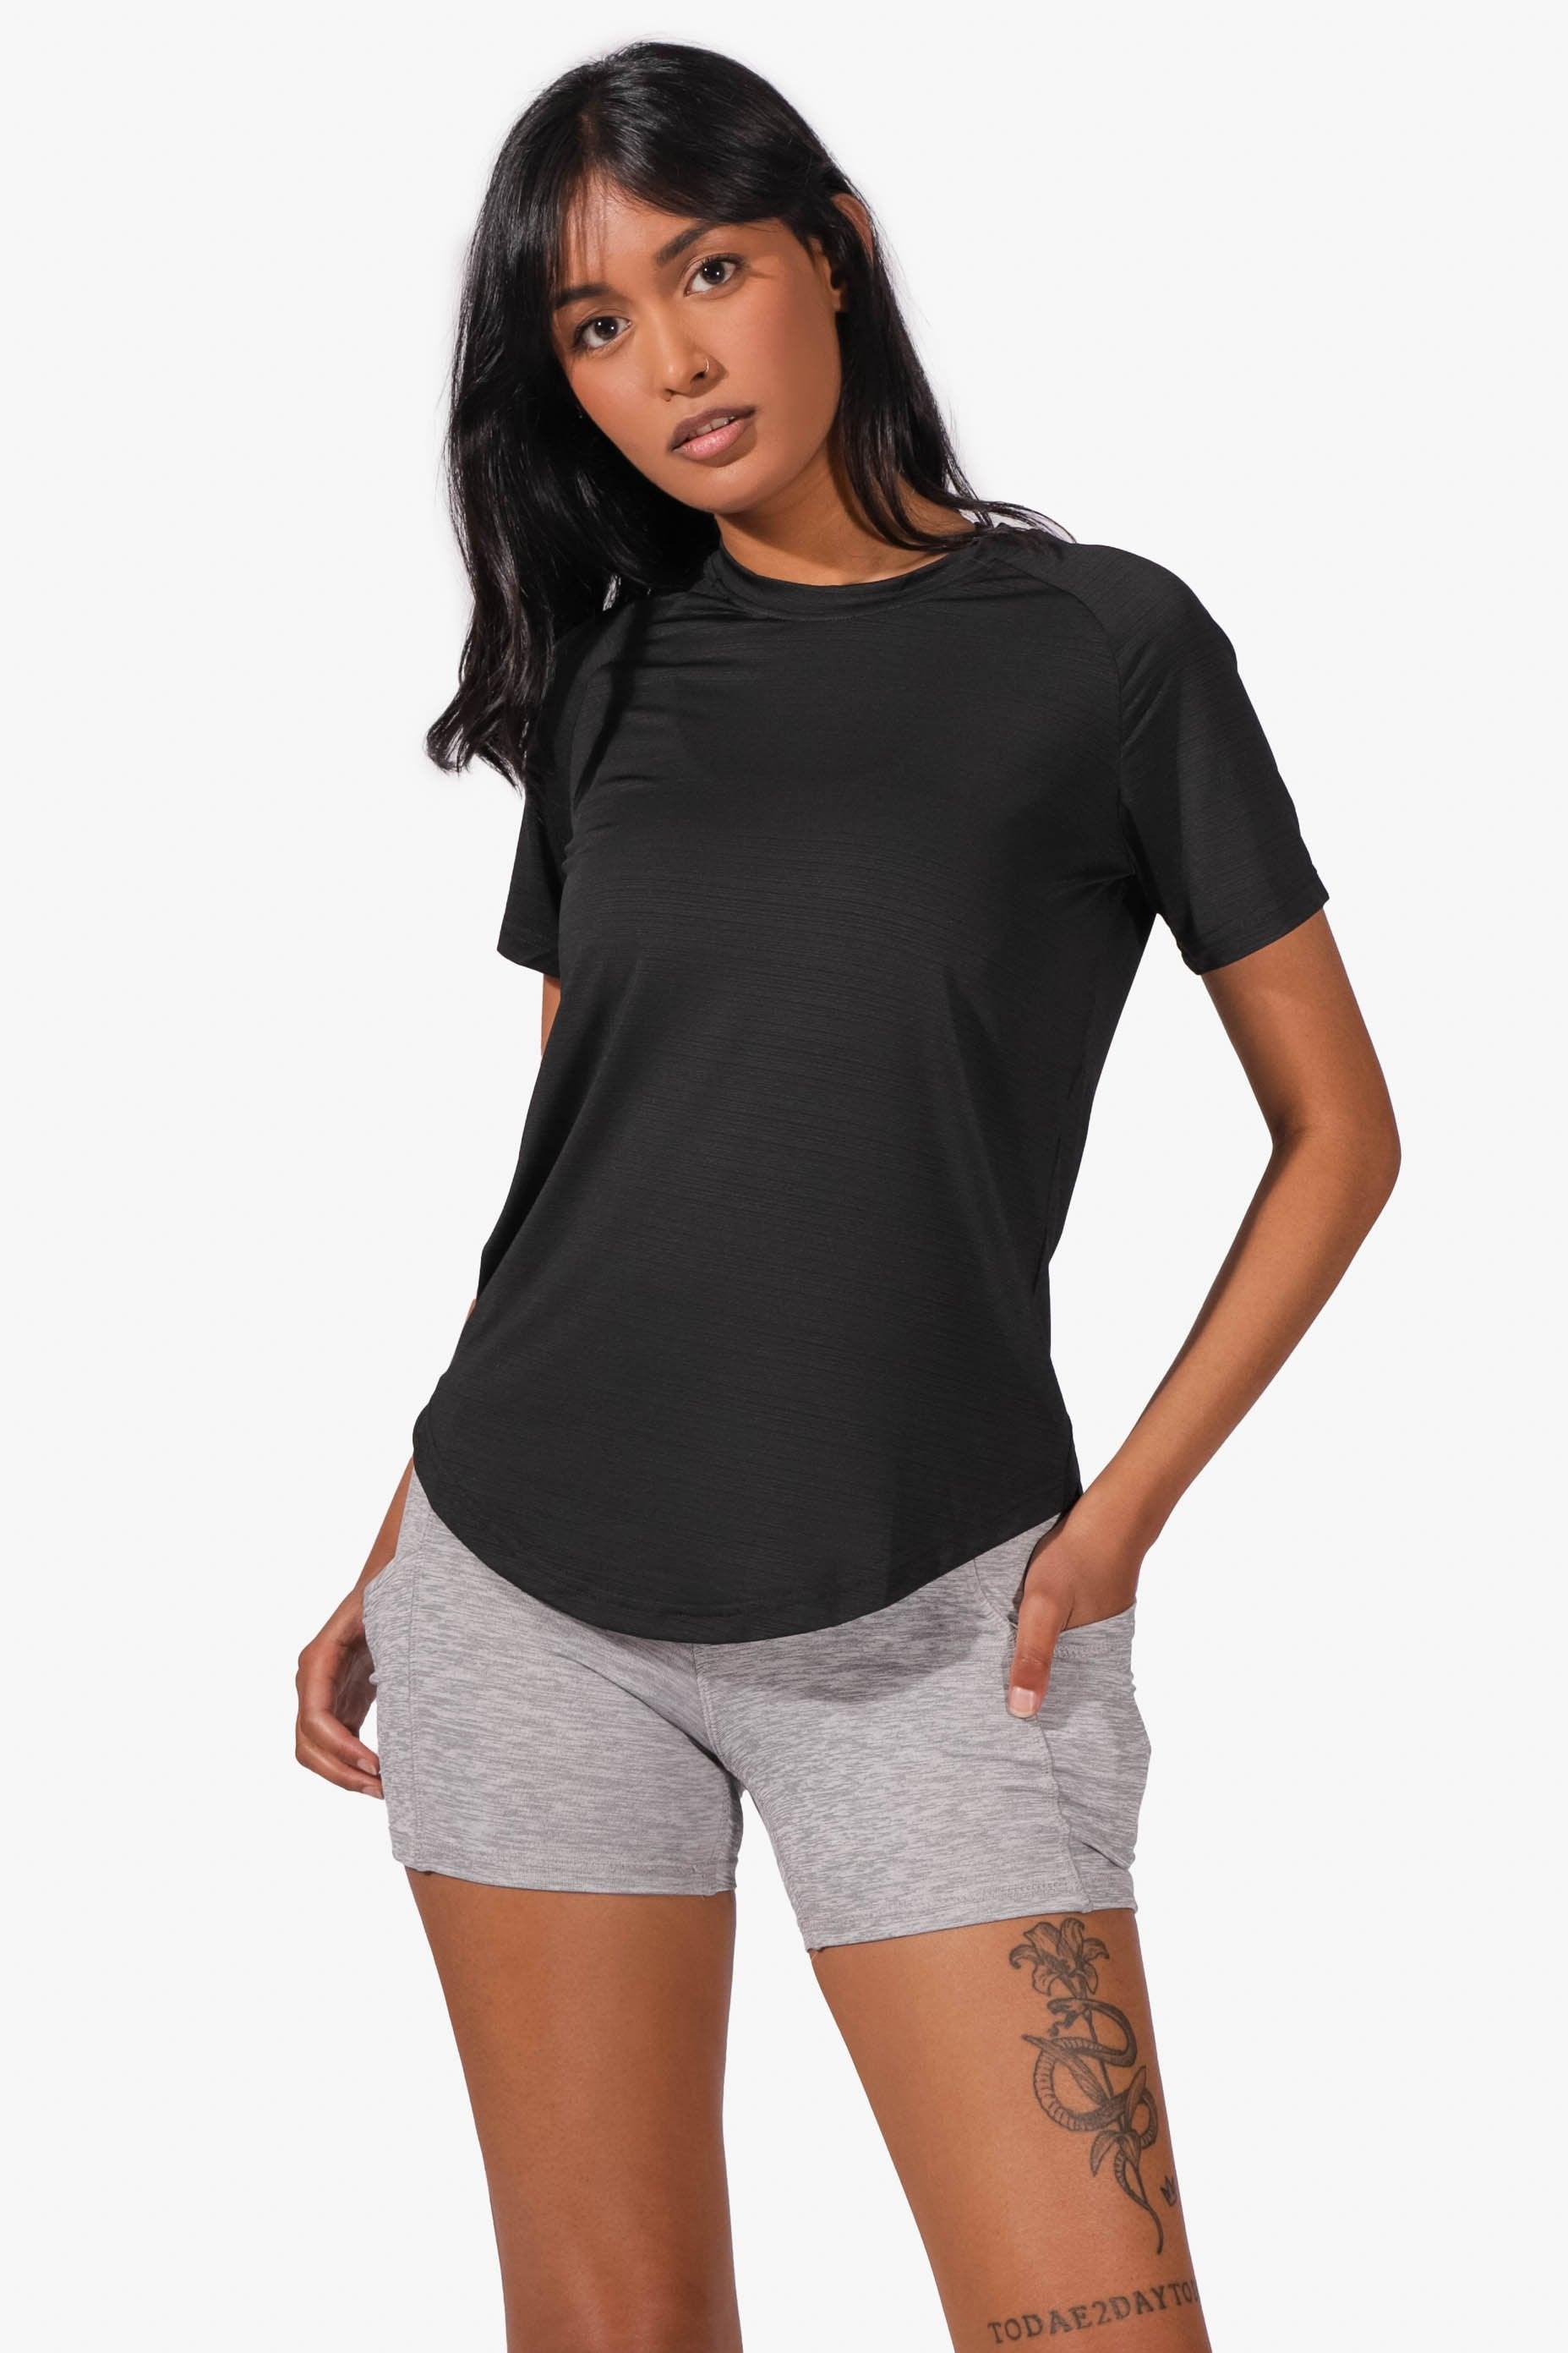 Full-Length Light-Weight Gym T-Shirt - Black (4609135837251)